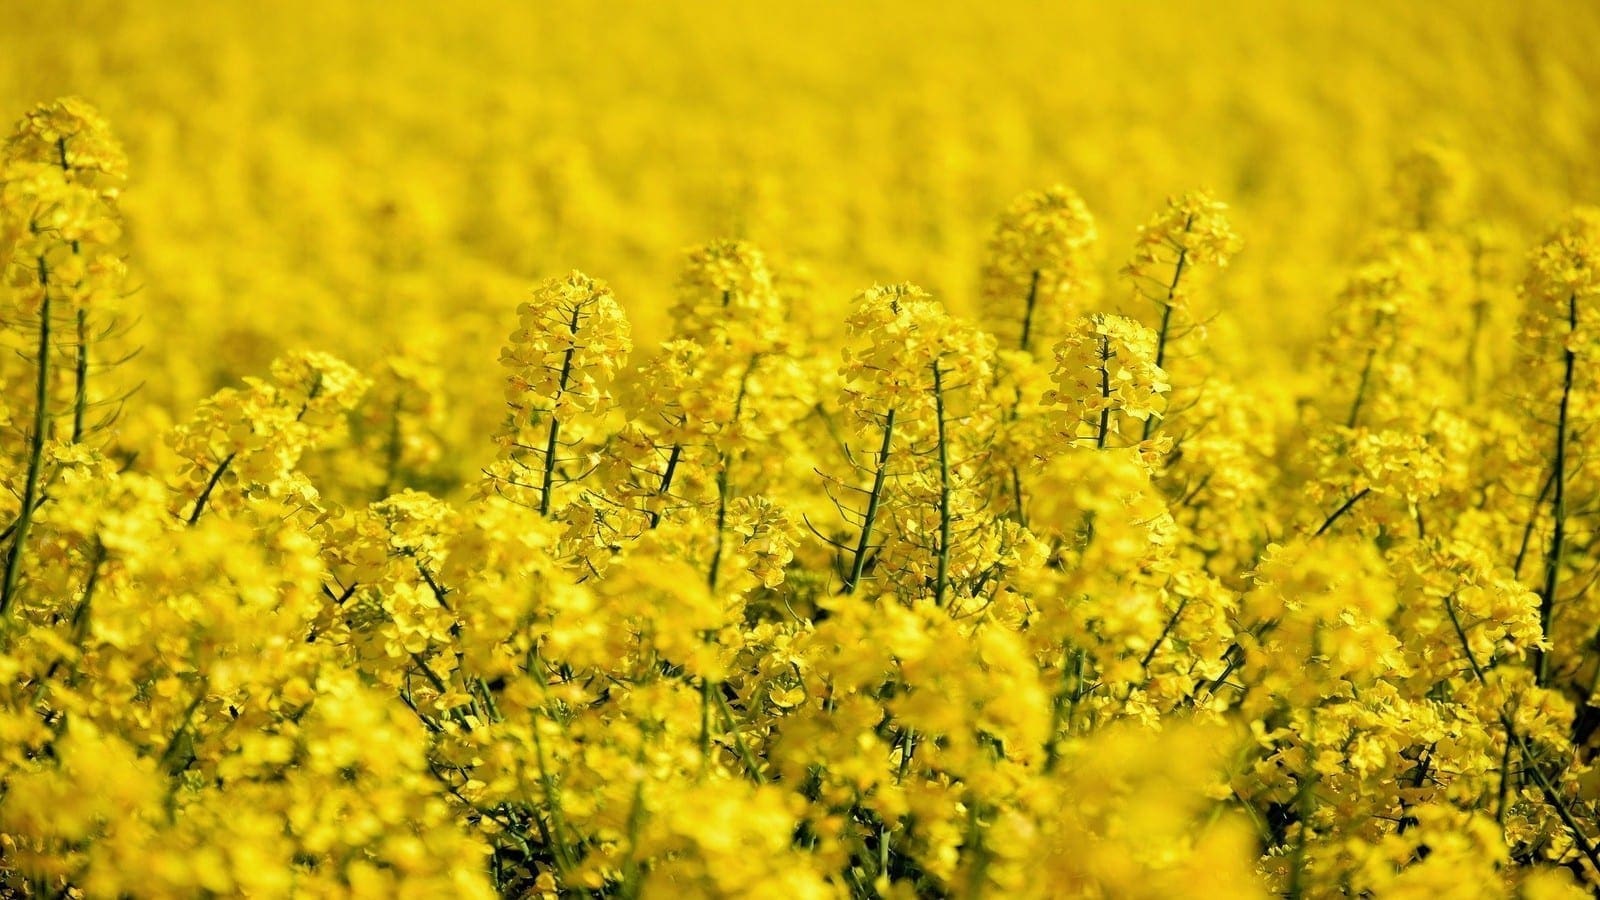 European Union approves genetically modified oilseed rape, soybeans